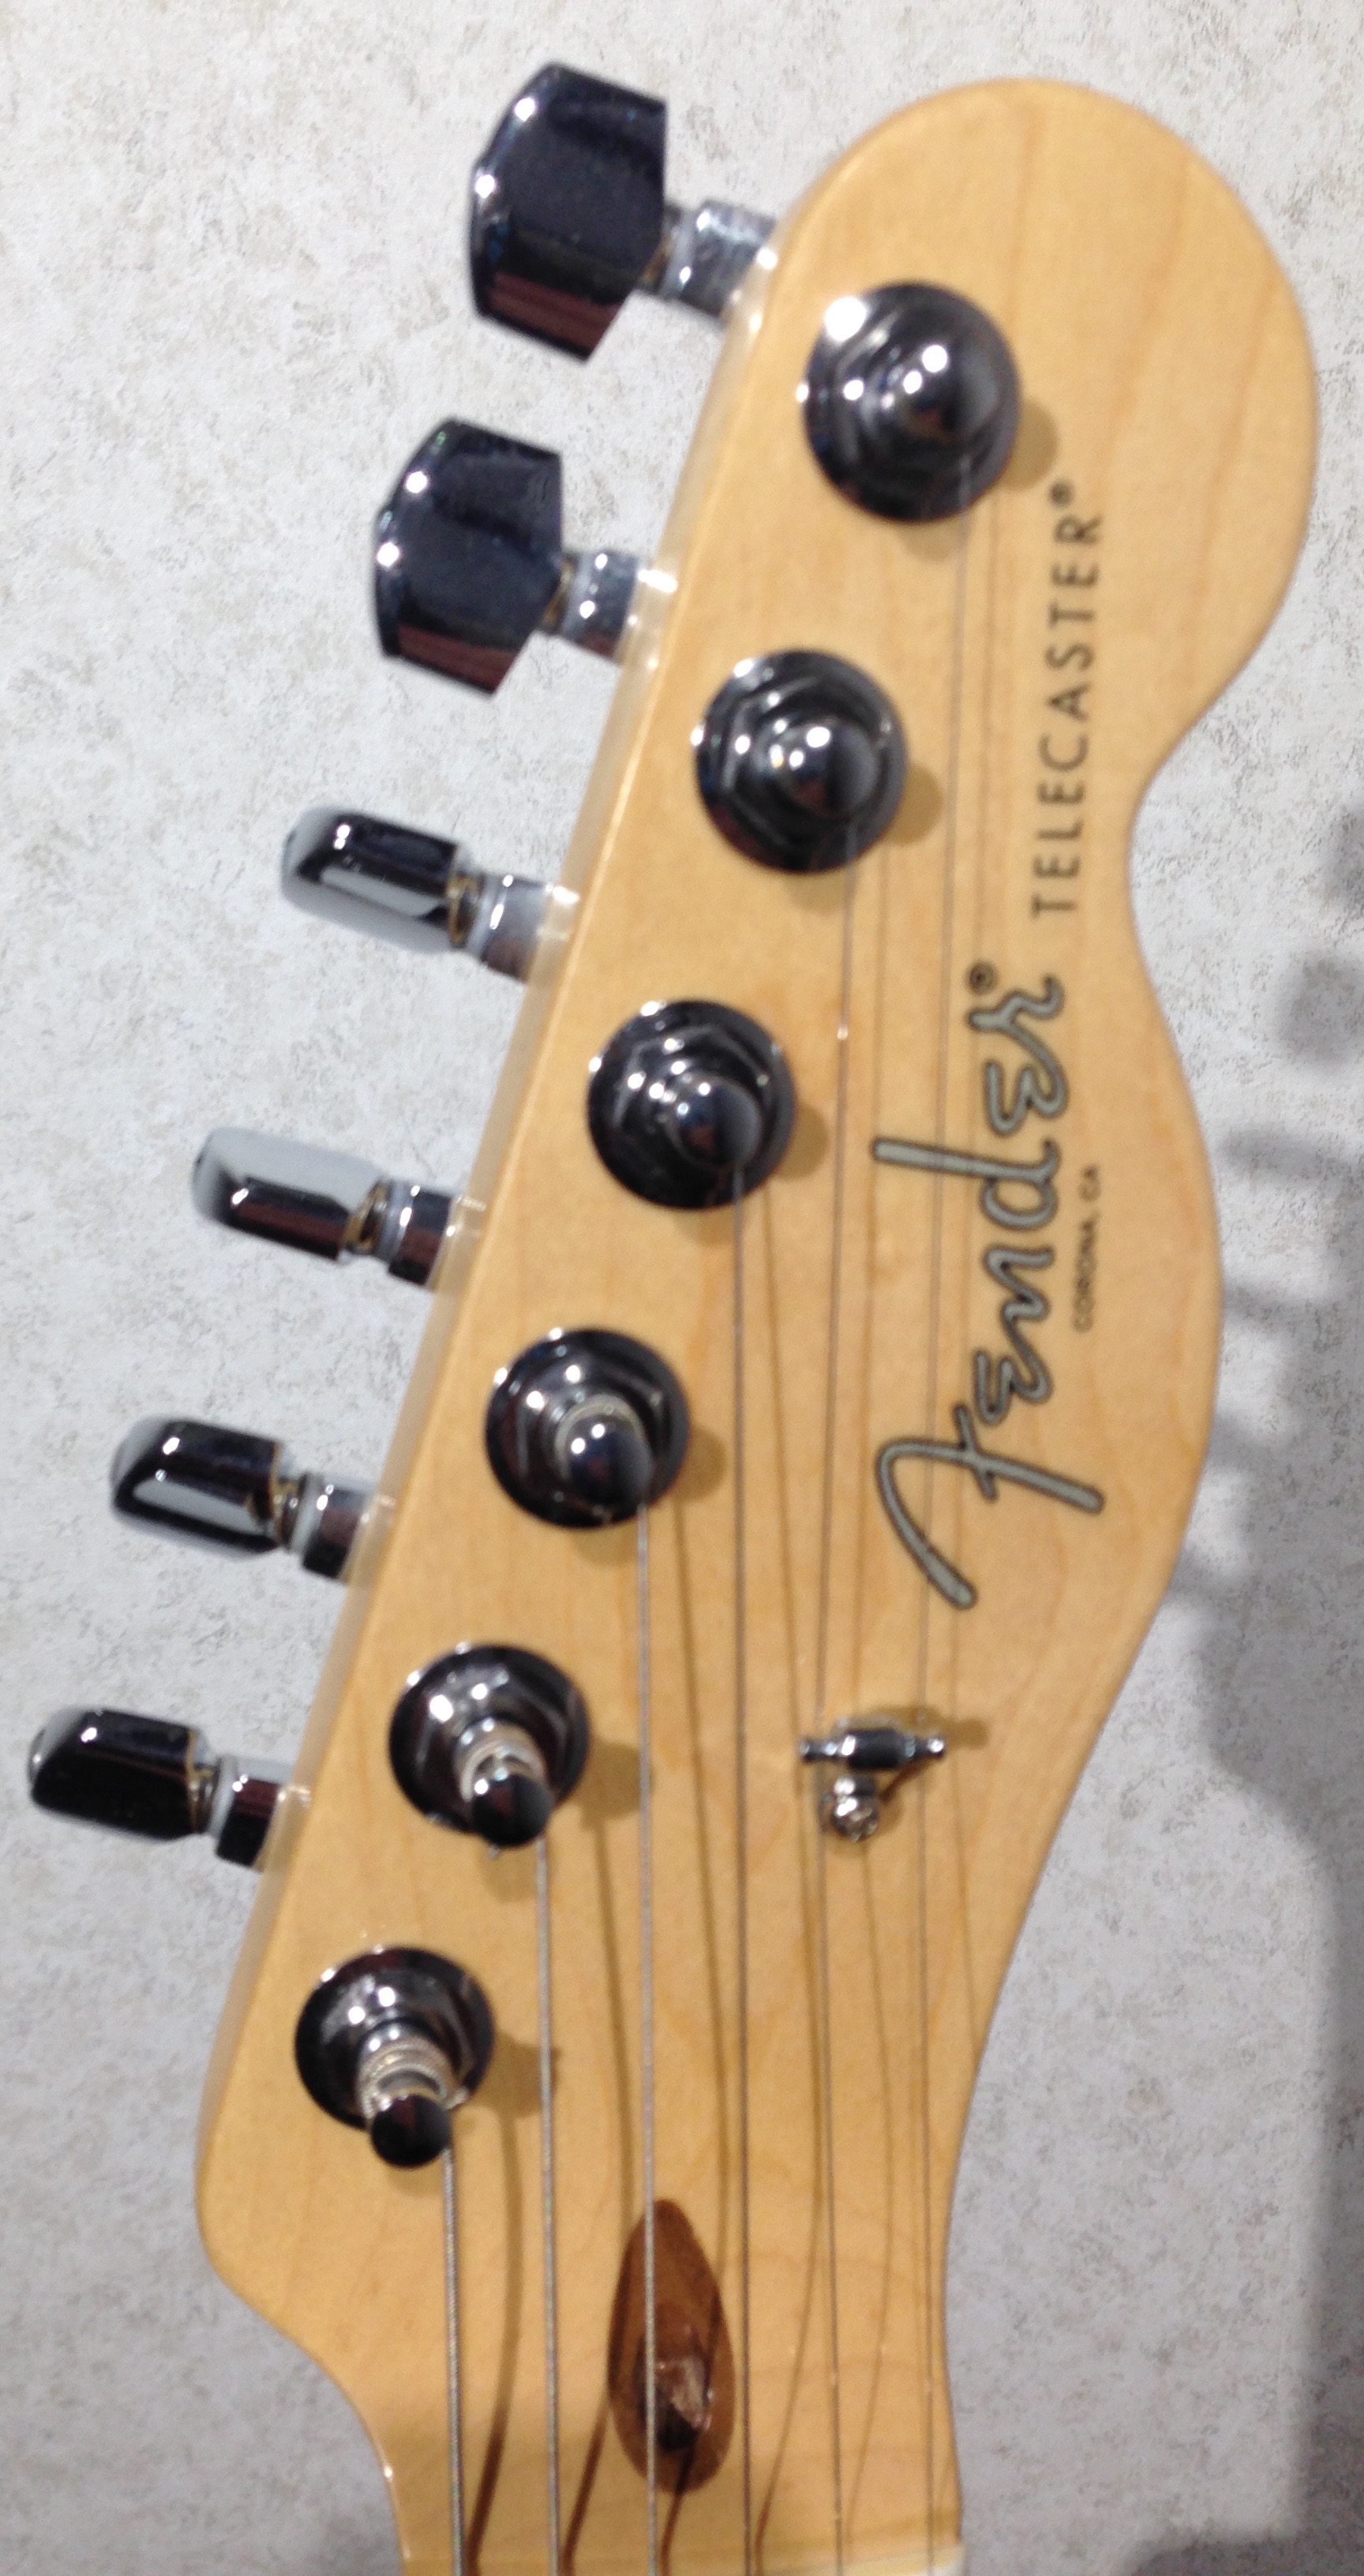 Fender Telecaster Bass Headstock - lasmanualidaddesdeesther